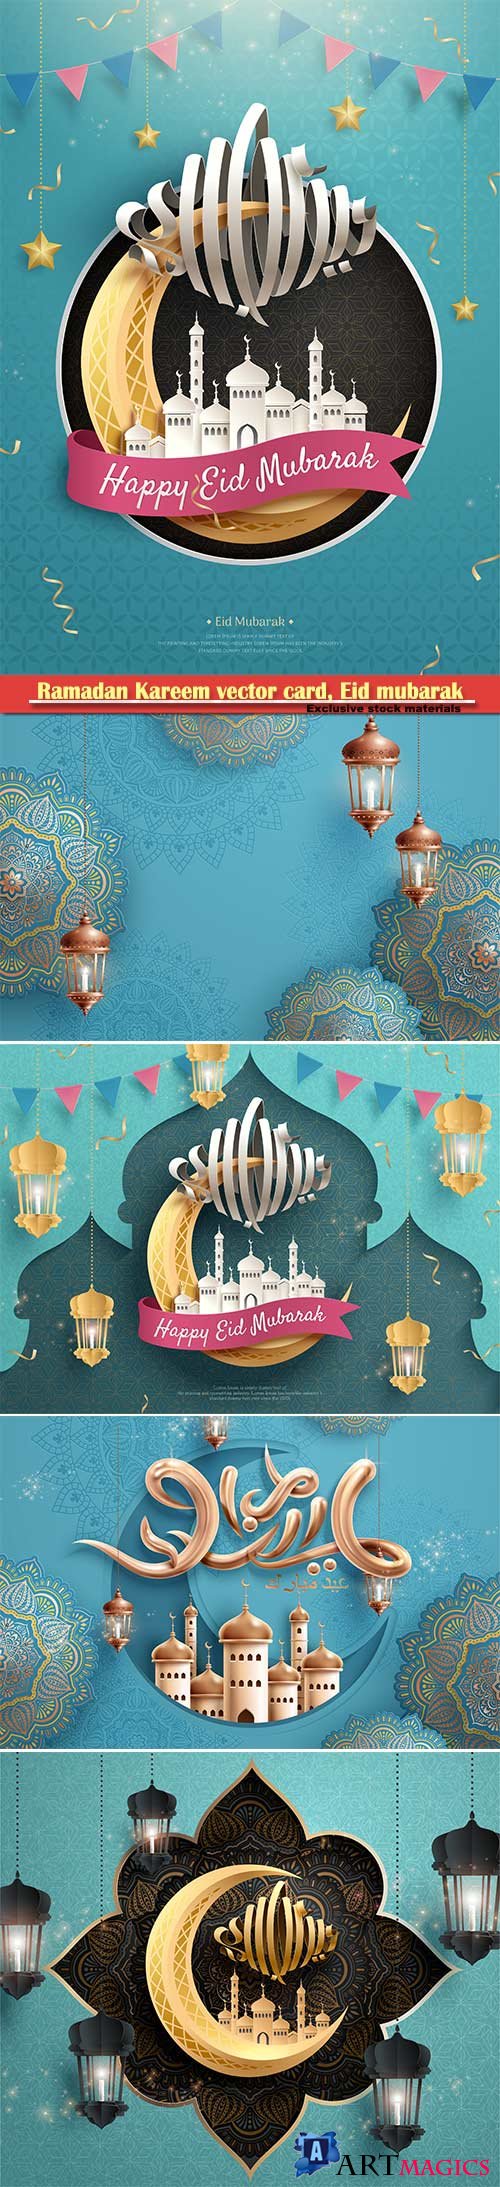 Ramadan Kareem vector card, Eid mubarak calligraphy design templates # 8